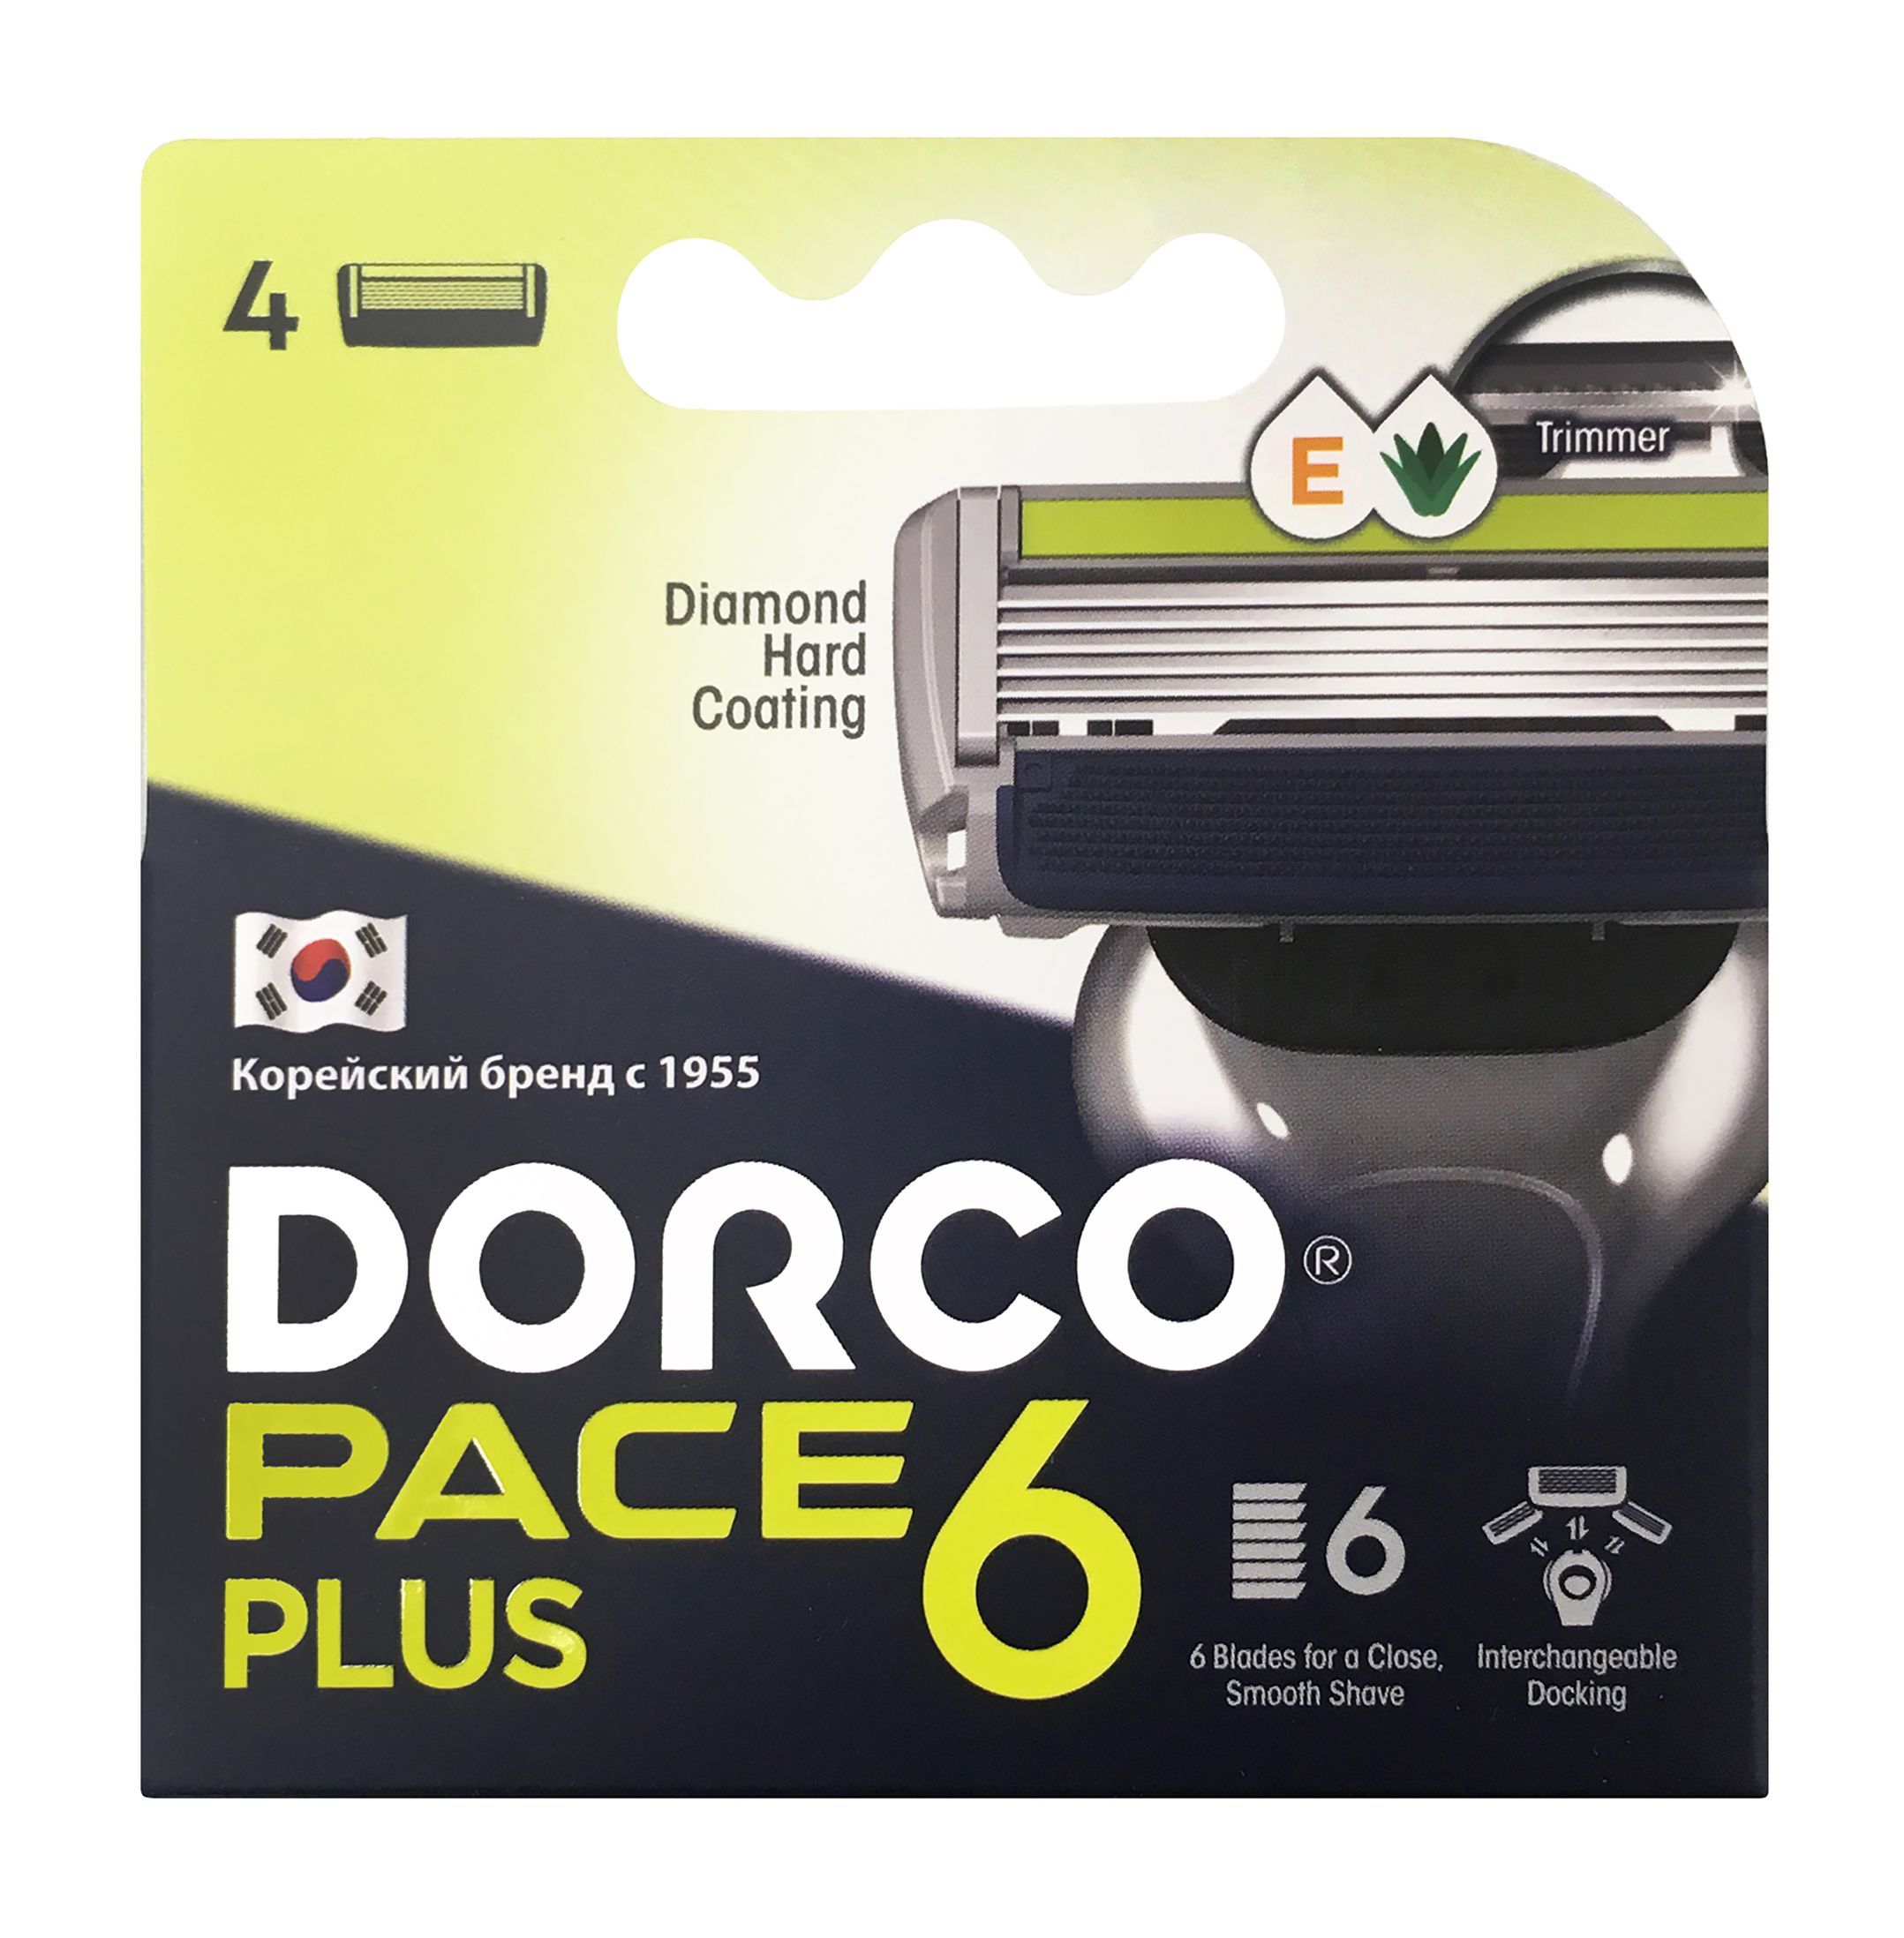 Кассеты dorco. Dorco Pace 6. Кассеты для бритья Dorco Pace 6. Dorco Pace 6 Plus 4шт. Сменные кассеты Dorco Pace 6 Plus.